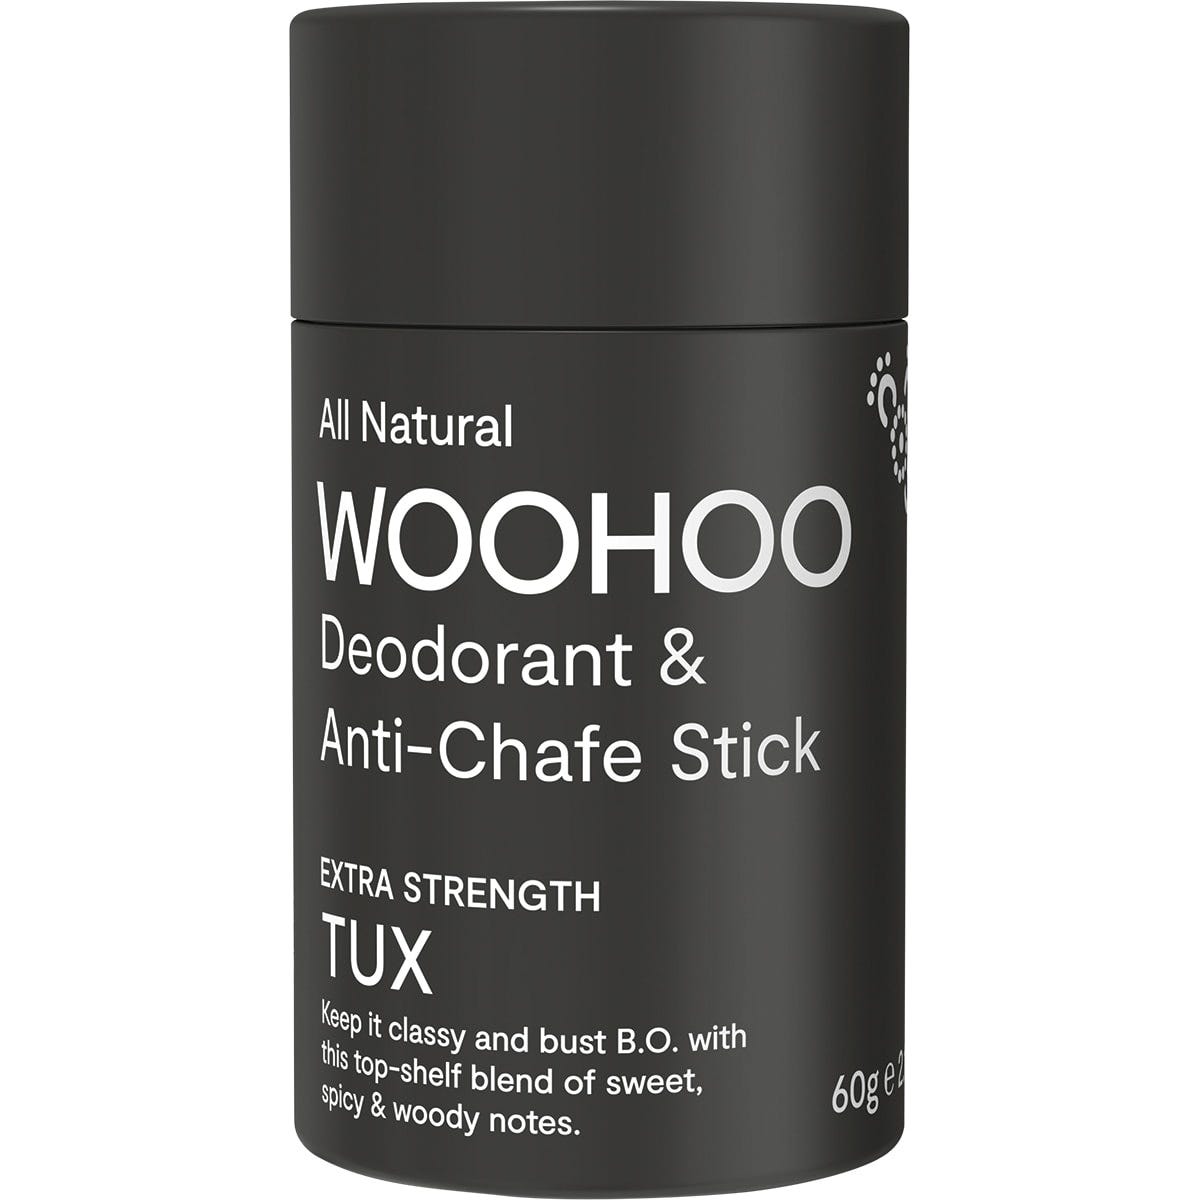 Woohoo Body Deodorant Stick Tux Extra Strength 60g - Dr Earth - Bath & Body